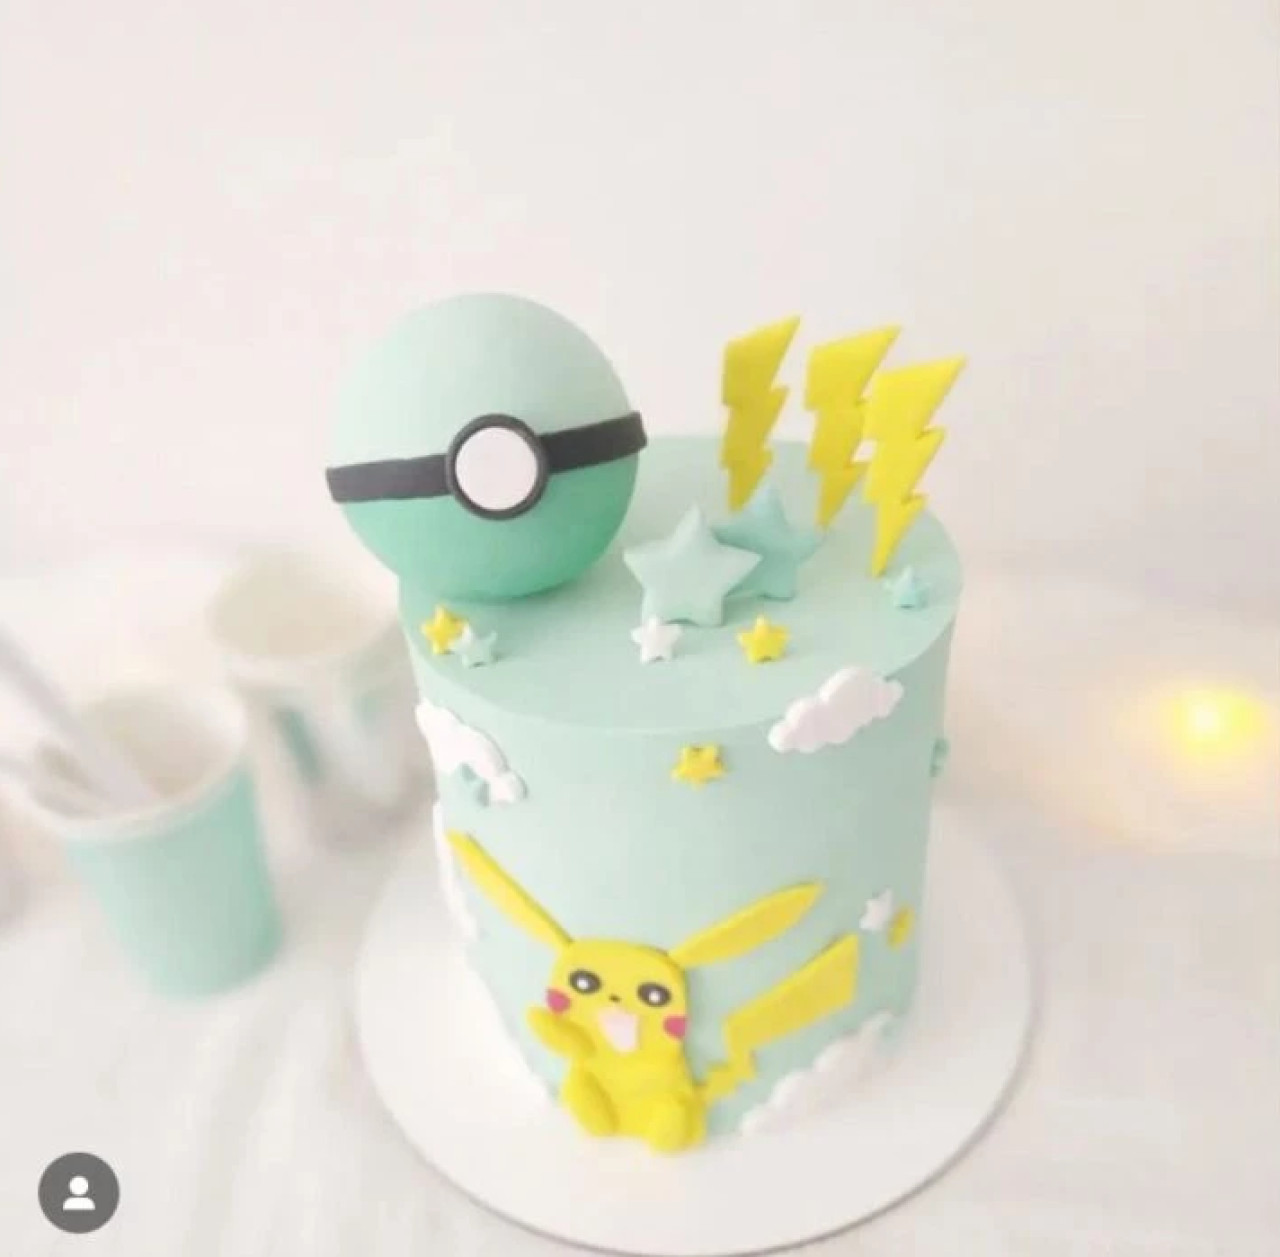 La torta de cumpleaños. Foto: Instagram.